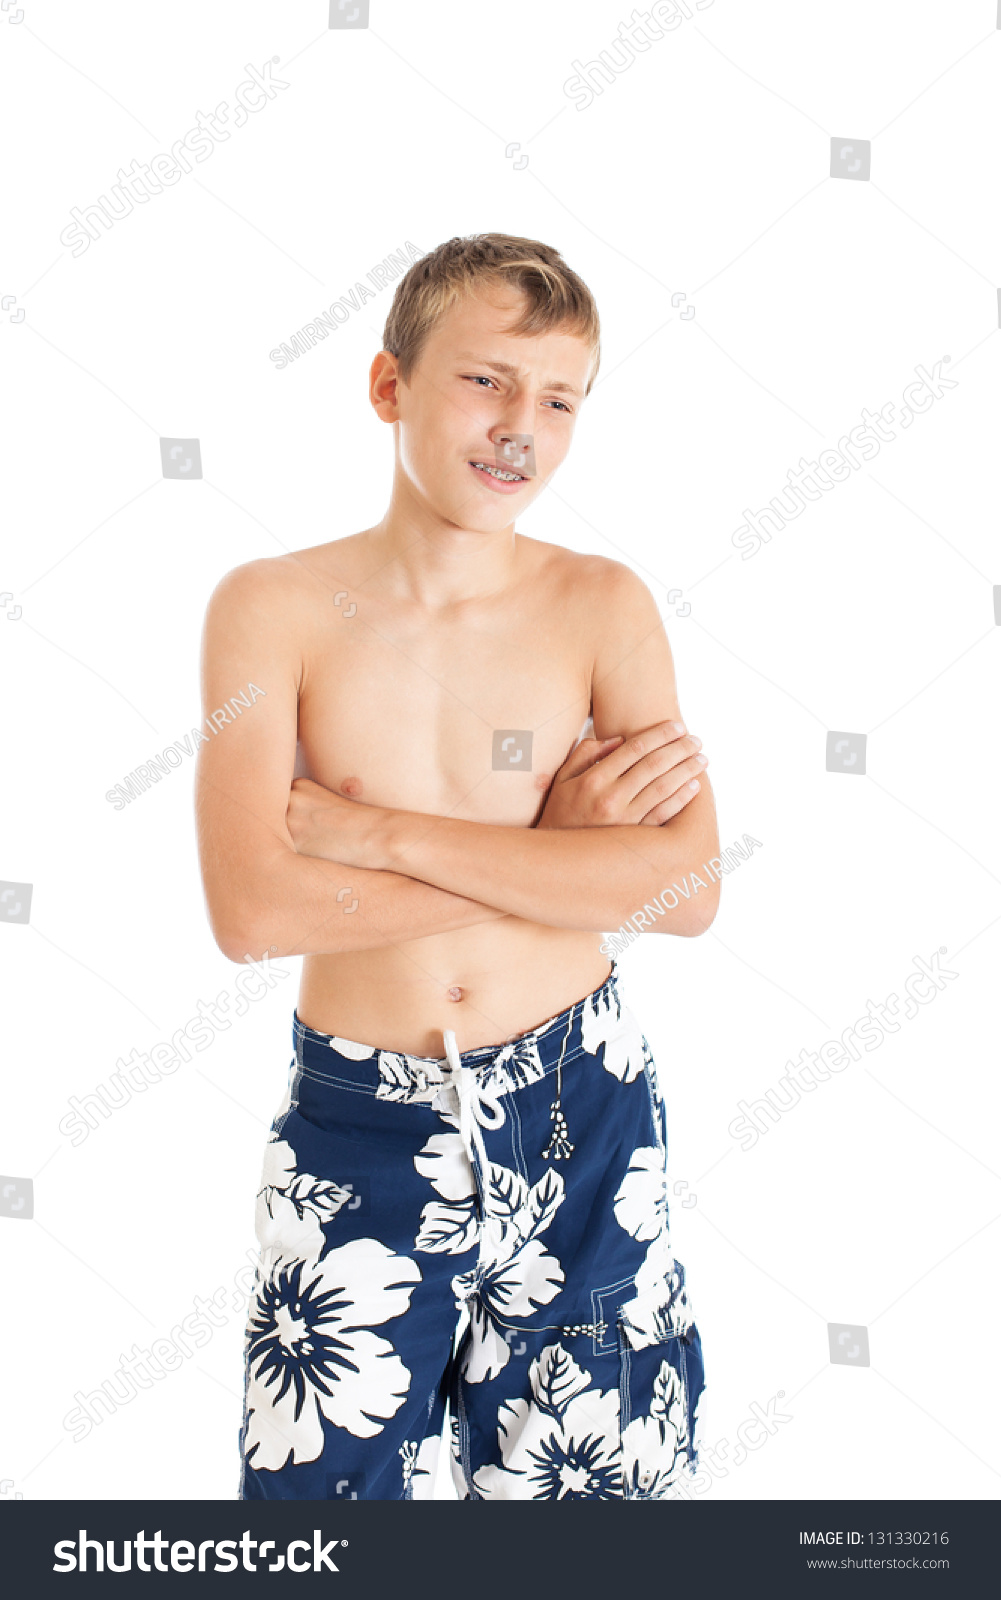 Portrait Of A Cute European Teen Boys Wearing Swimming Shorts. The Boy ...